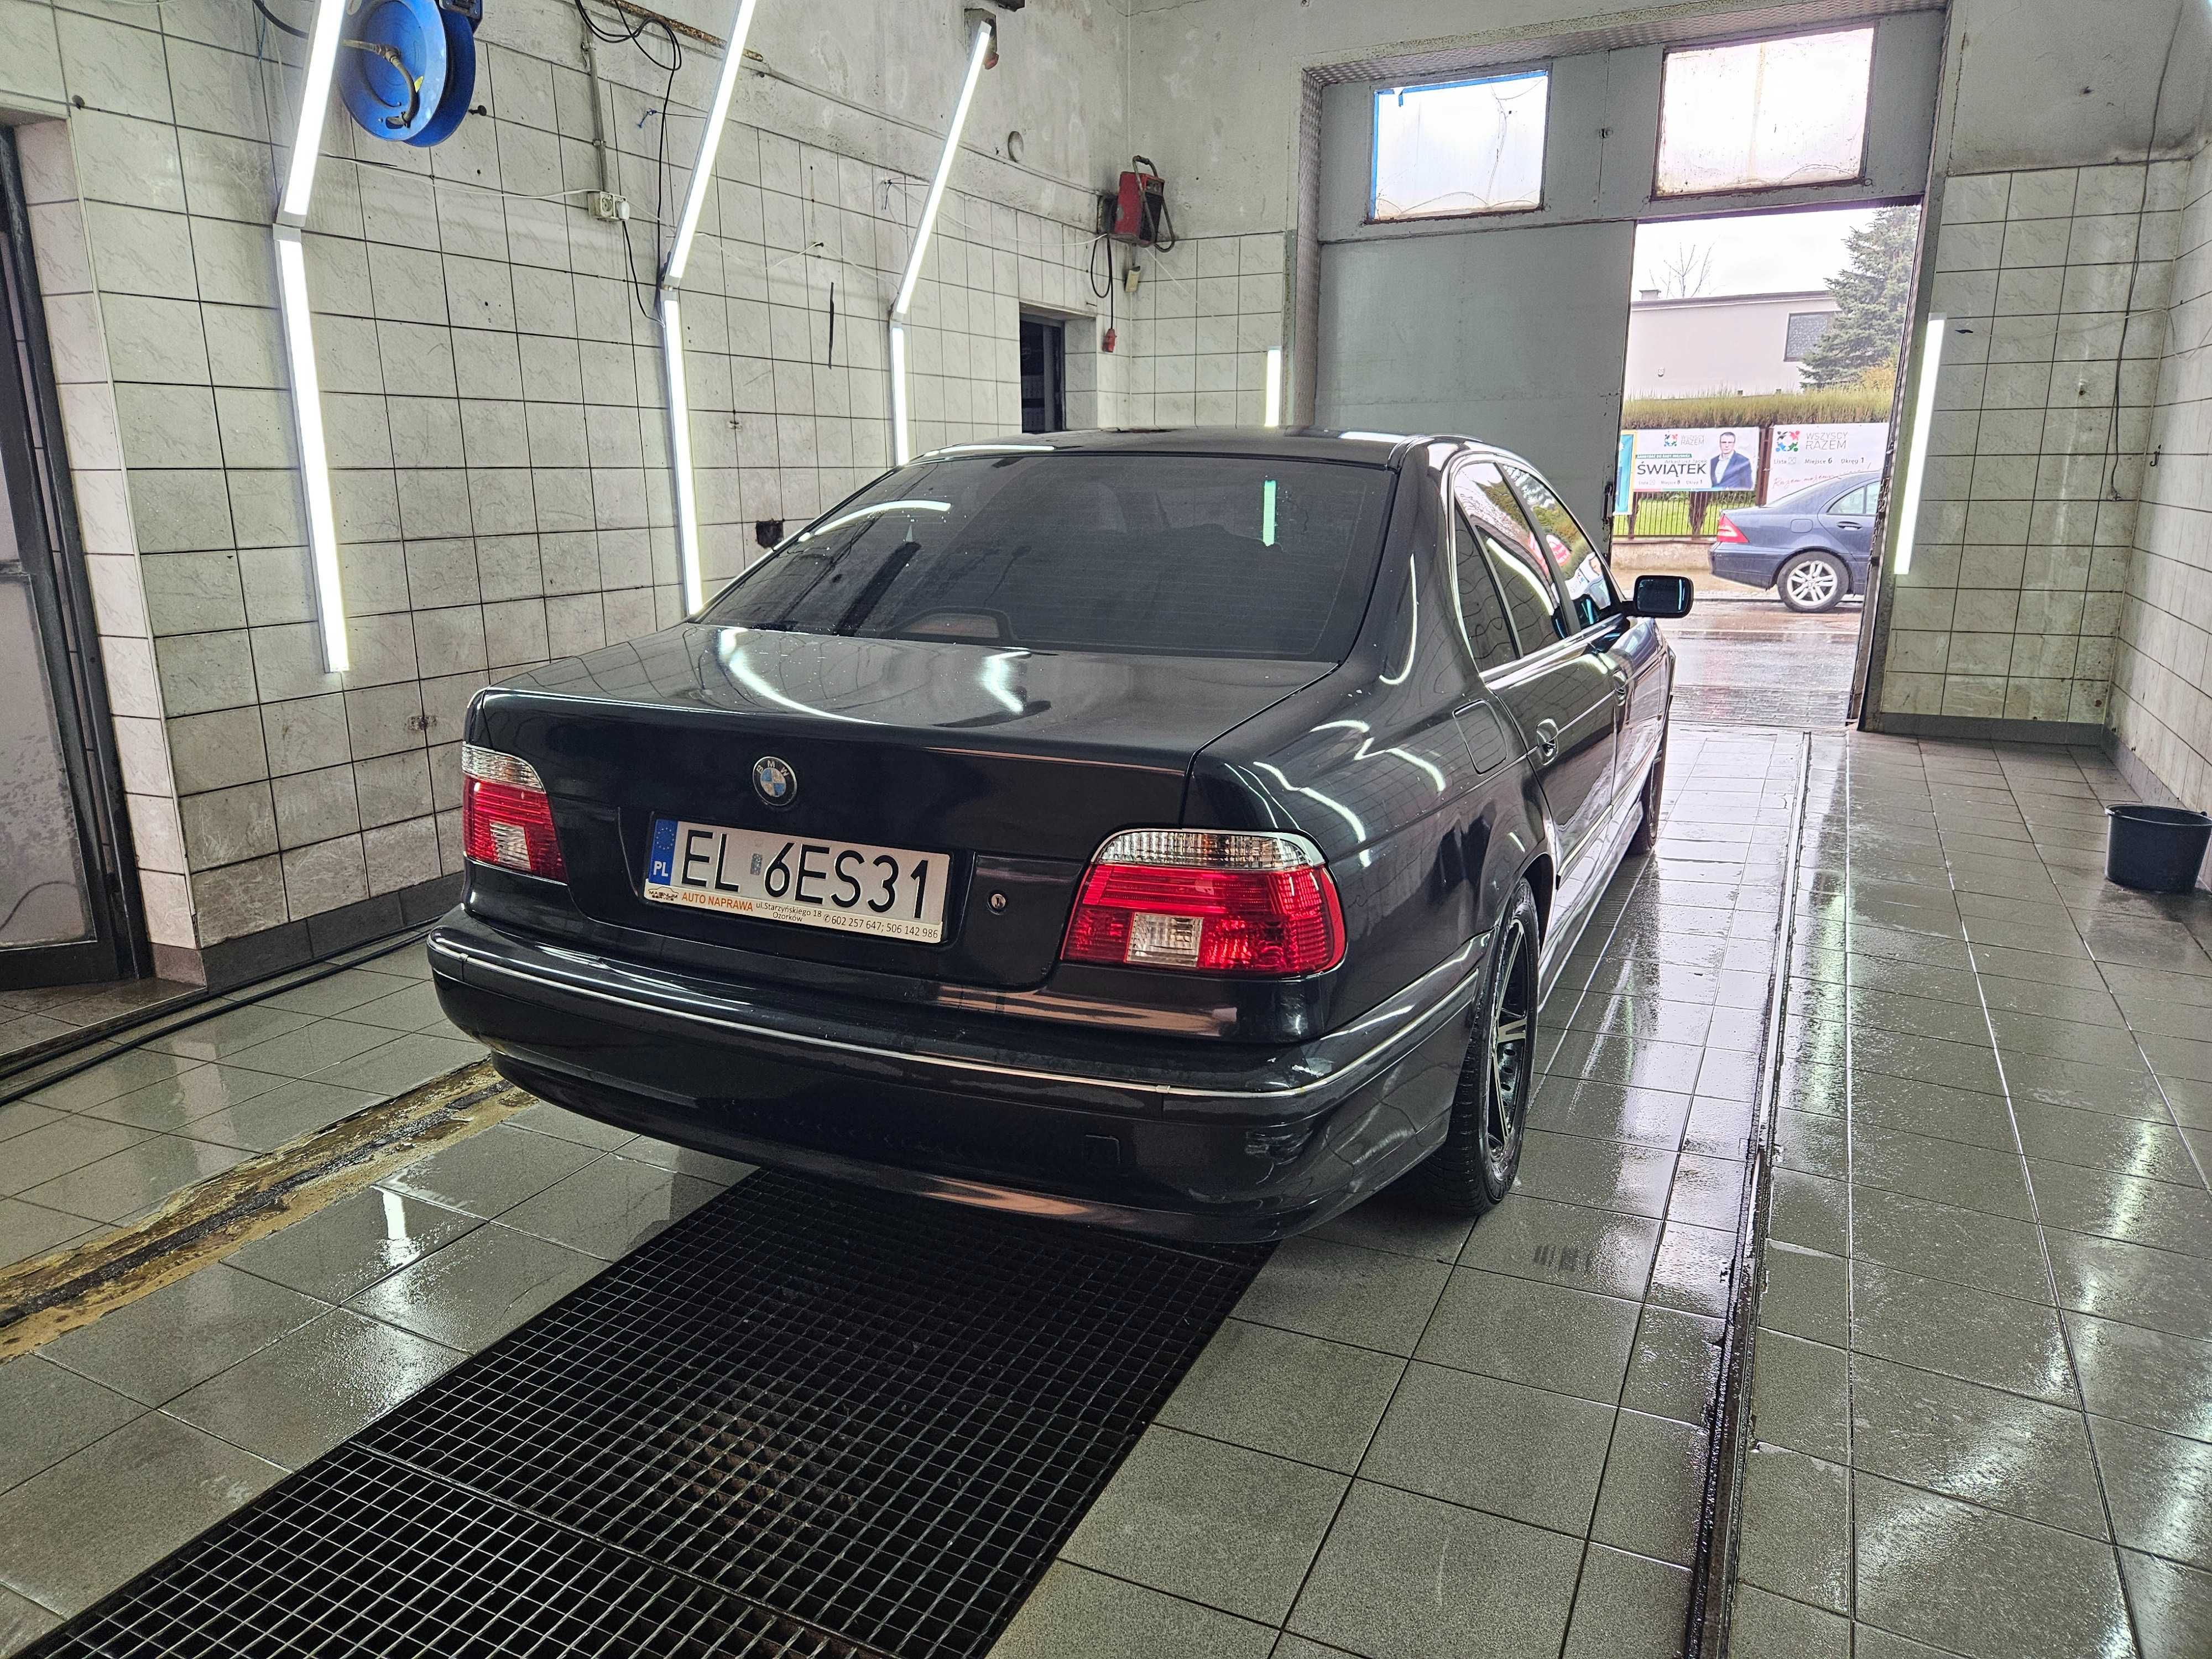 BMW serii 5 E39 1999r. 2.8 LPG